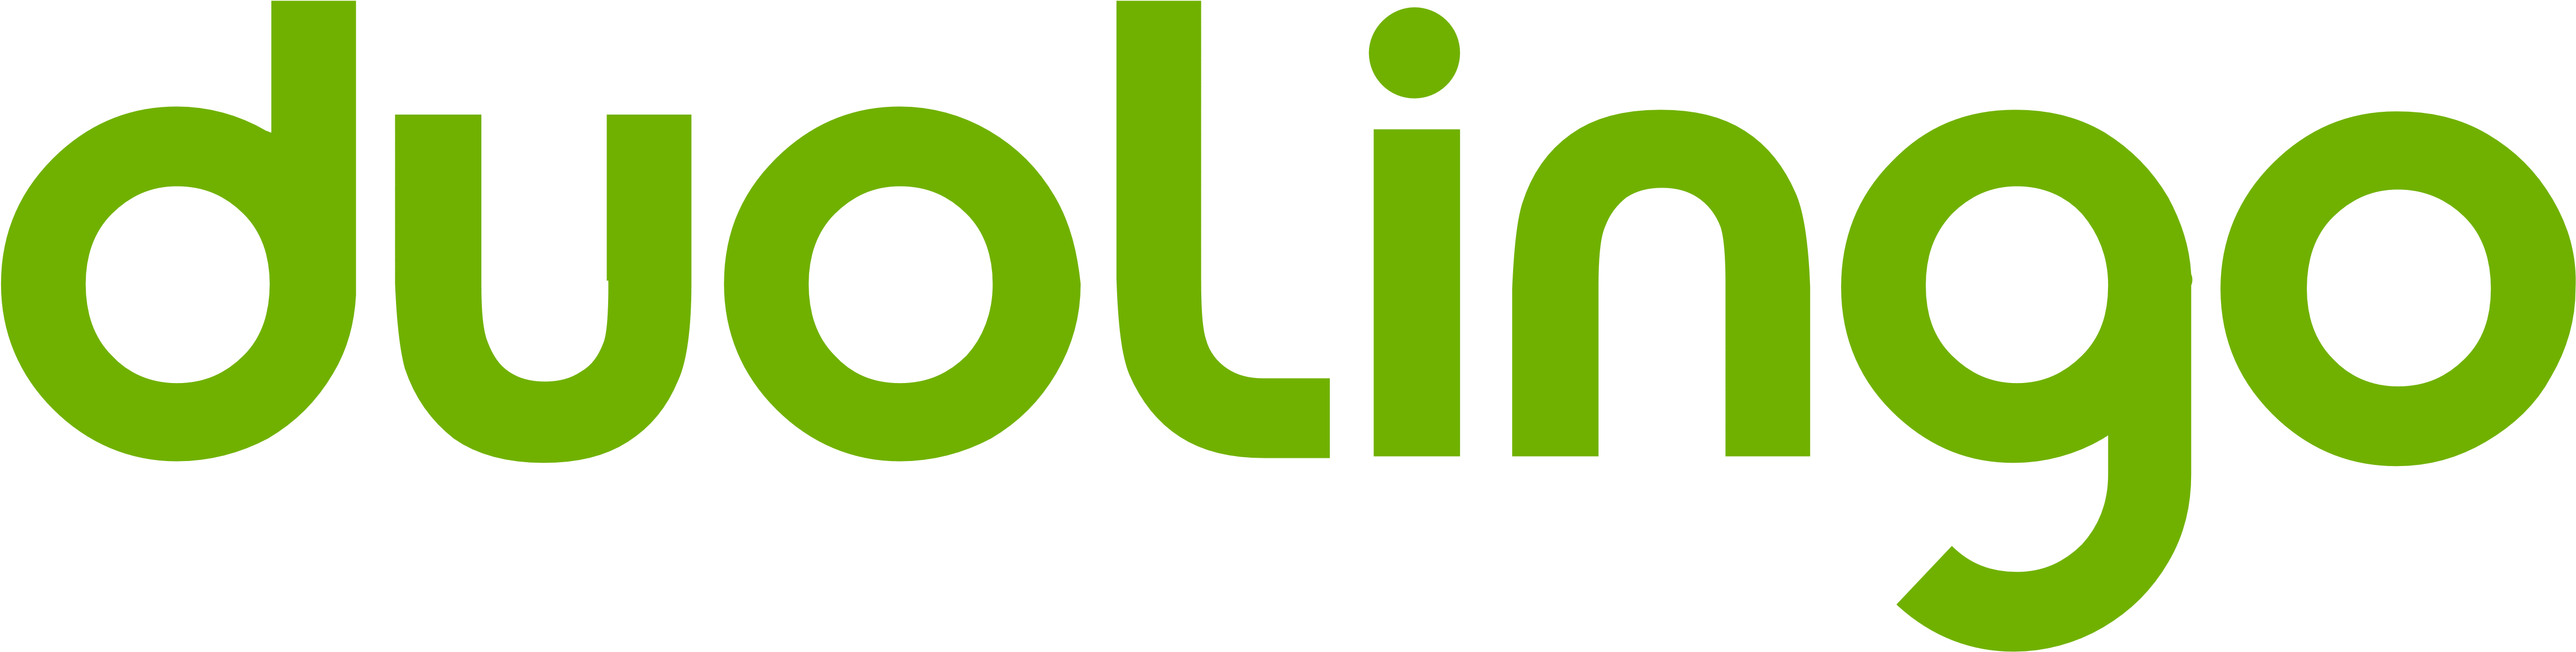 Duolingo Logos Download Apache Helicopter Logo Apache - Duolingo French (4656x1304)